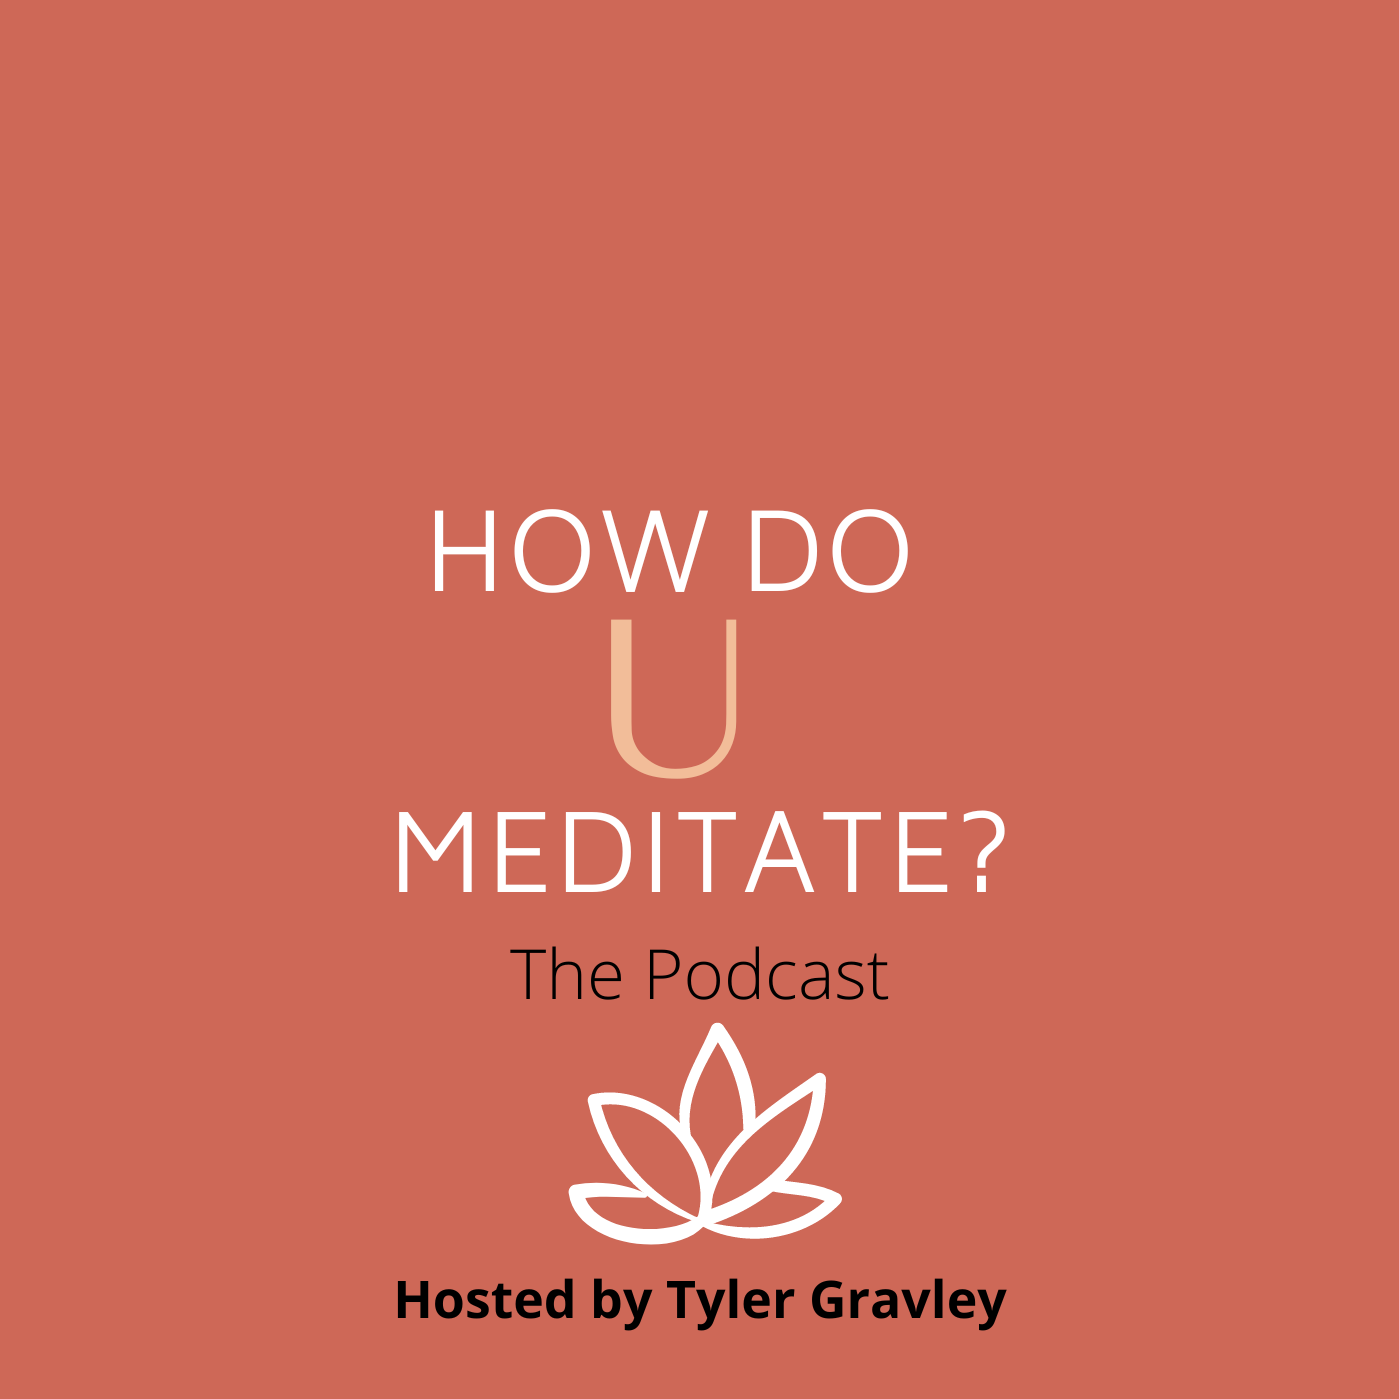 How Do U Meditate